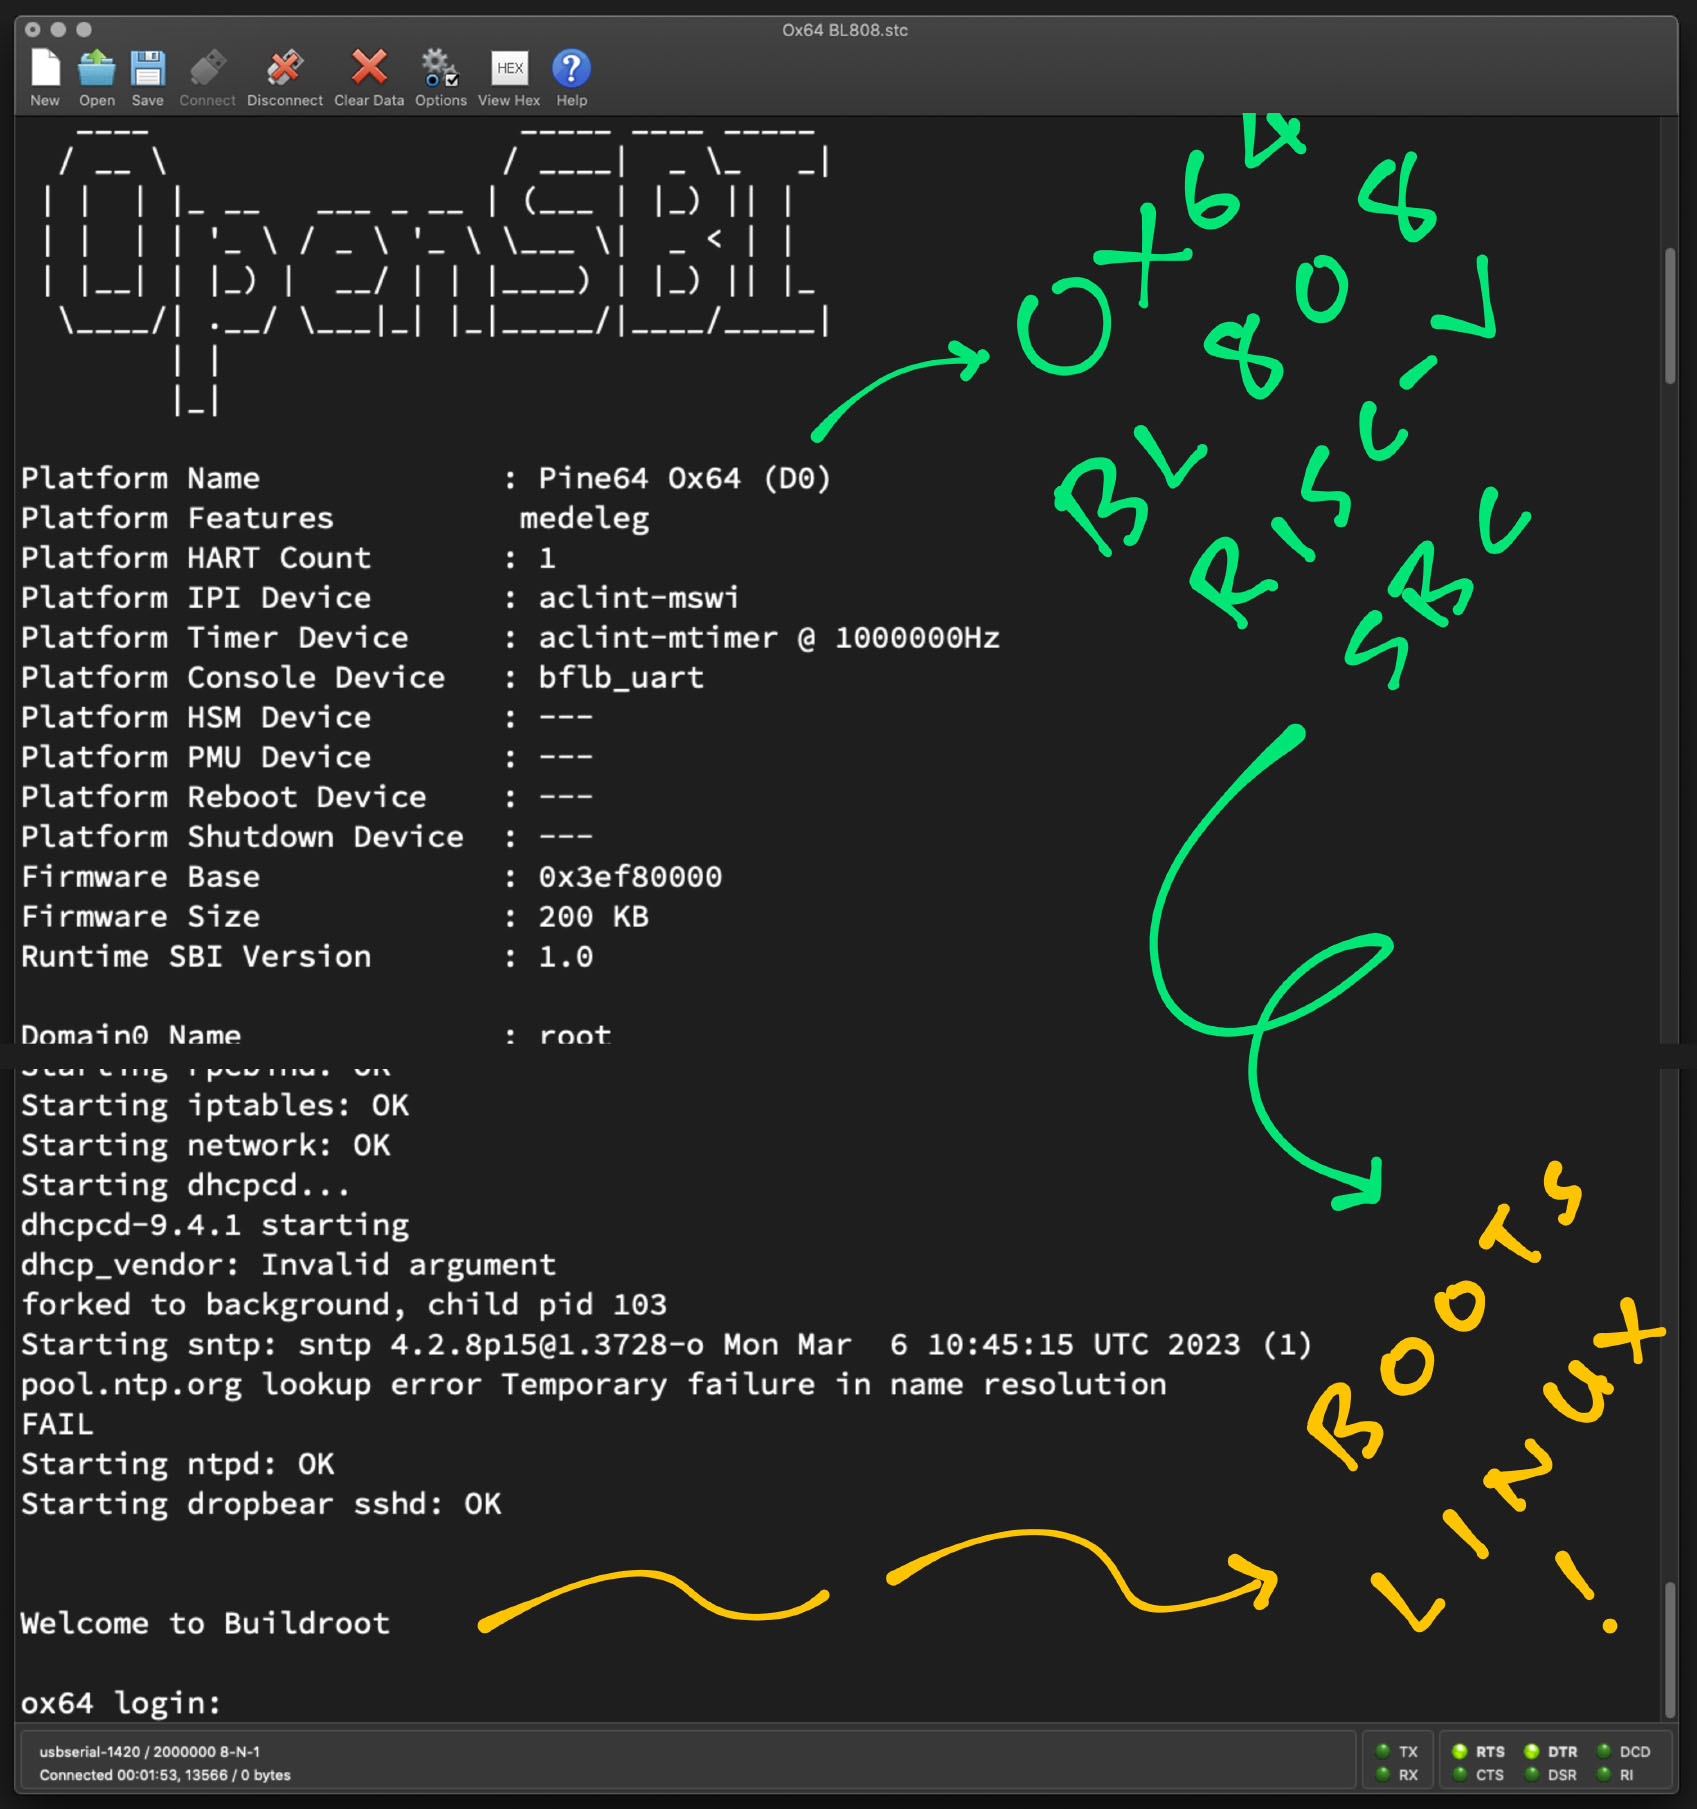 Booting Linux on Pine64 Ox64 64-bit RISC-V SBC (Bouffalo Lab BL808)